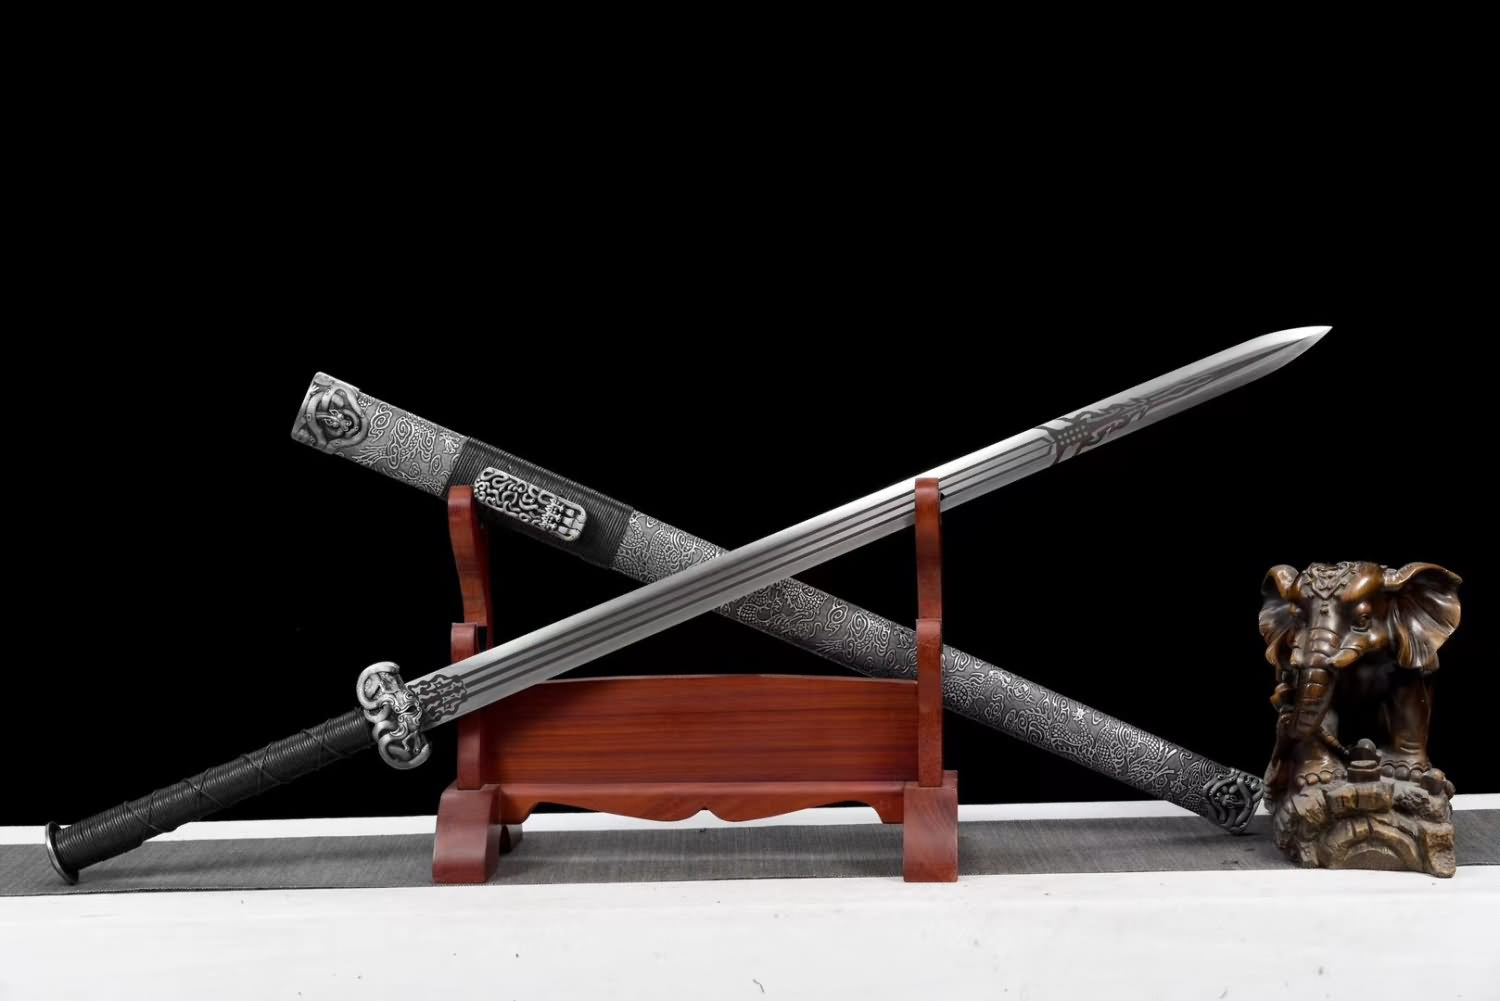 Han Sword - High Carbon Steel Blade, Silver Gray Scabbard - Martial Arts Weapon